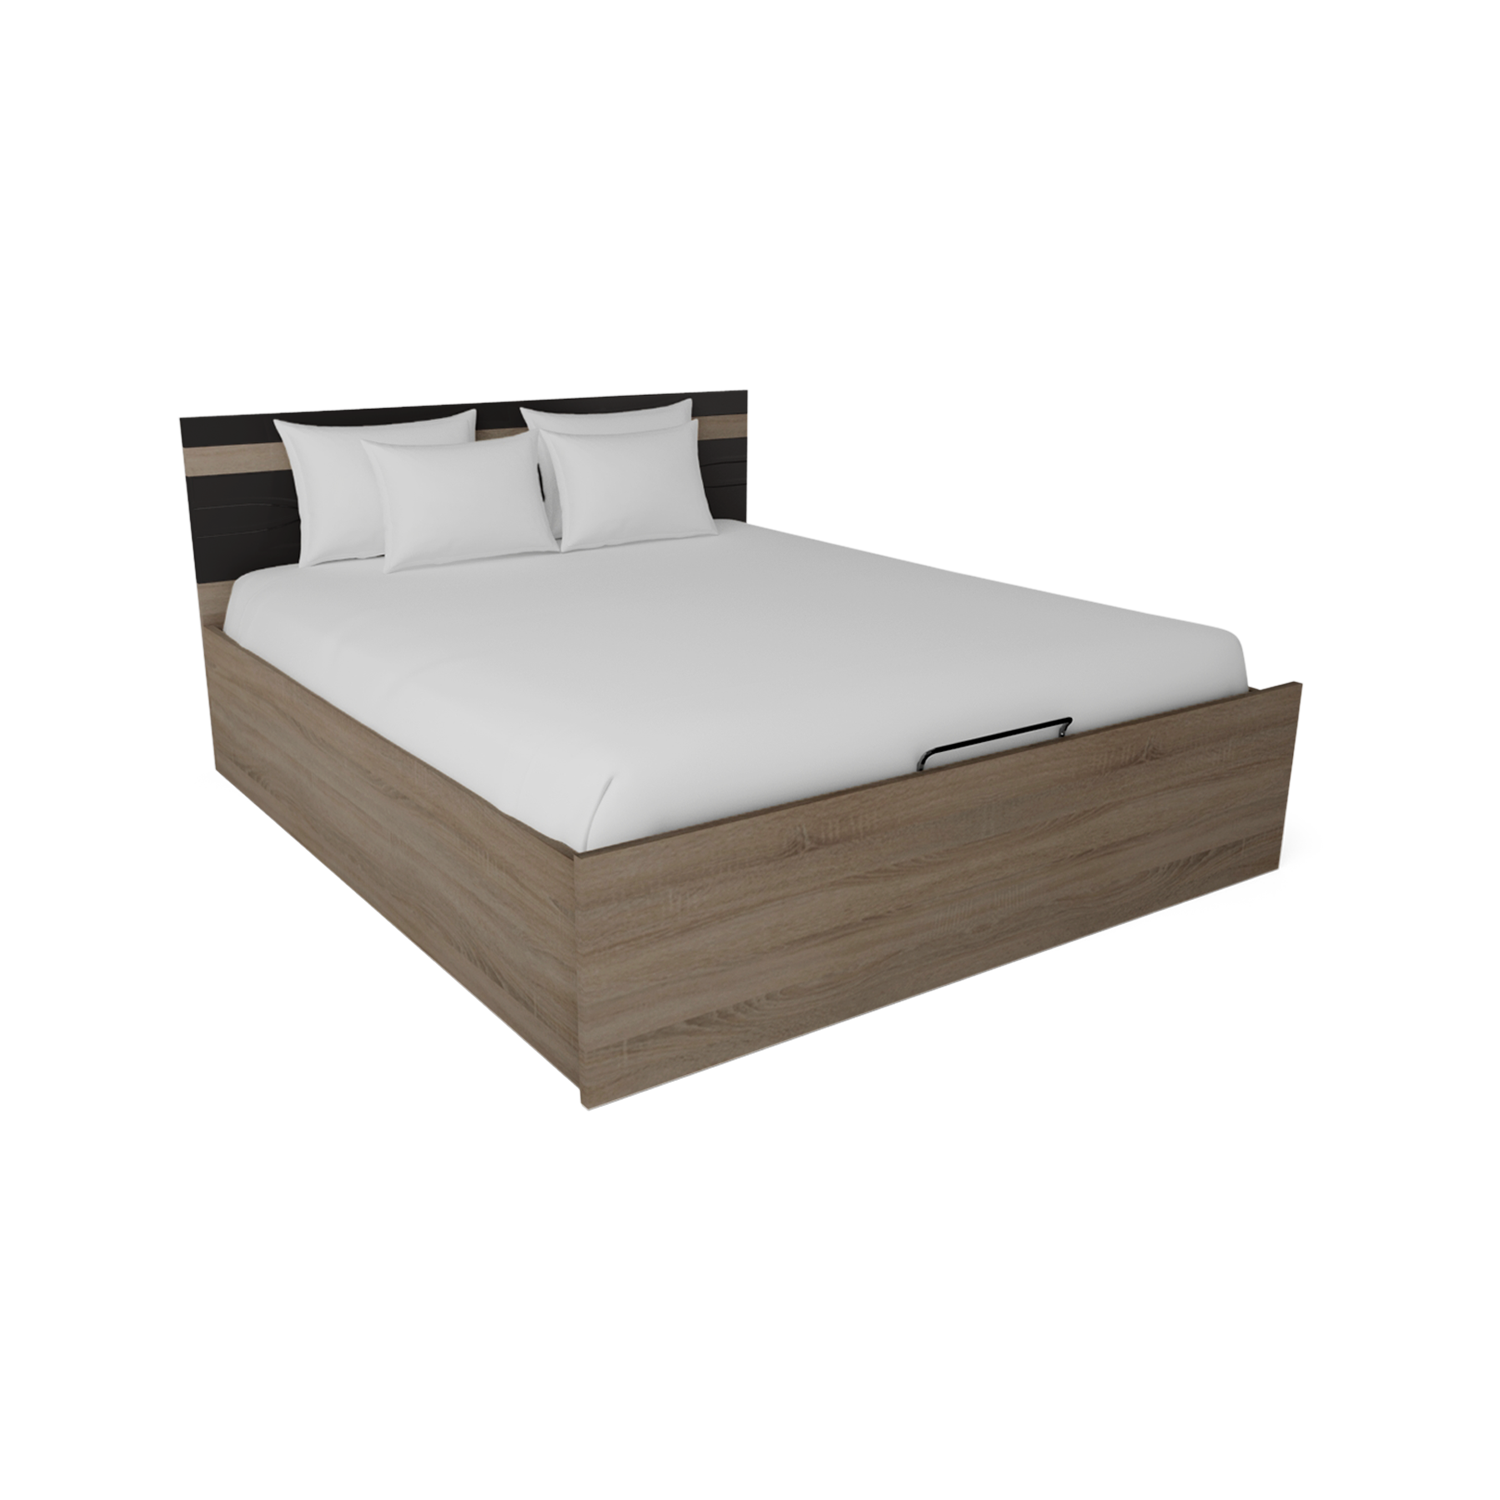 Zen Queen Size Bed Hydraulic Storage, Hydraulic Bed Frame